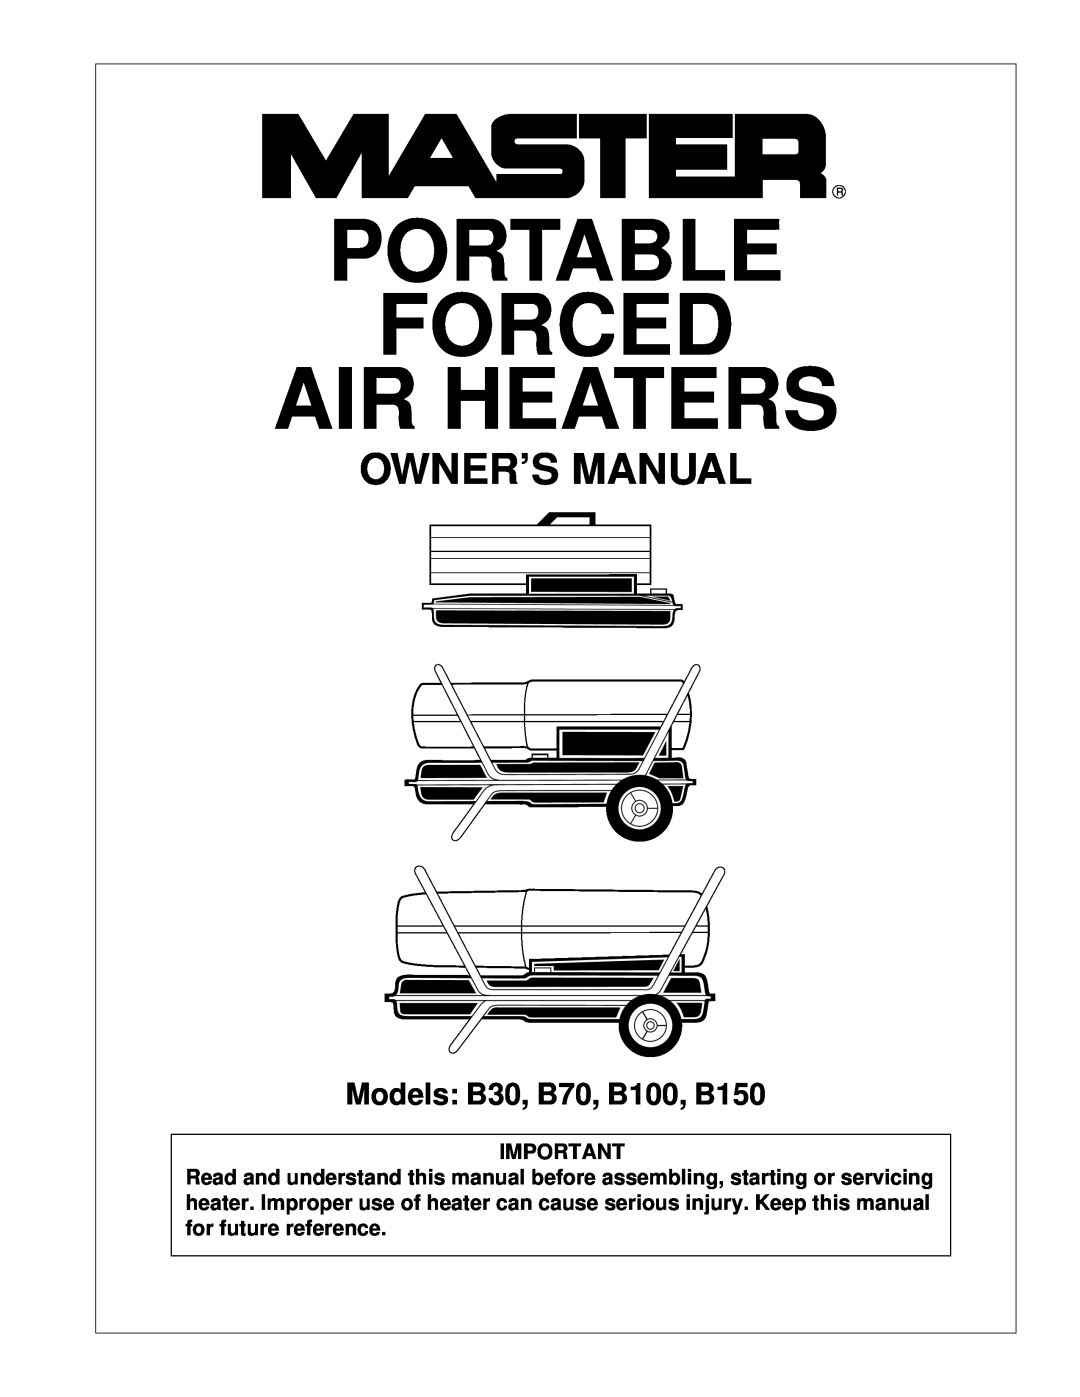 Master Lock owner manual Models B30, B70, B100, B150, Portable Forced Air Heaters, Side 